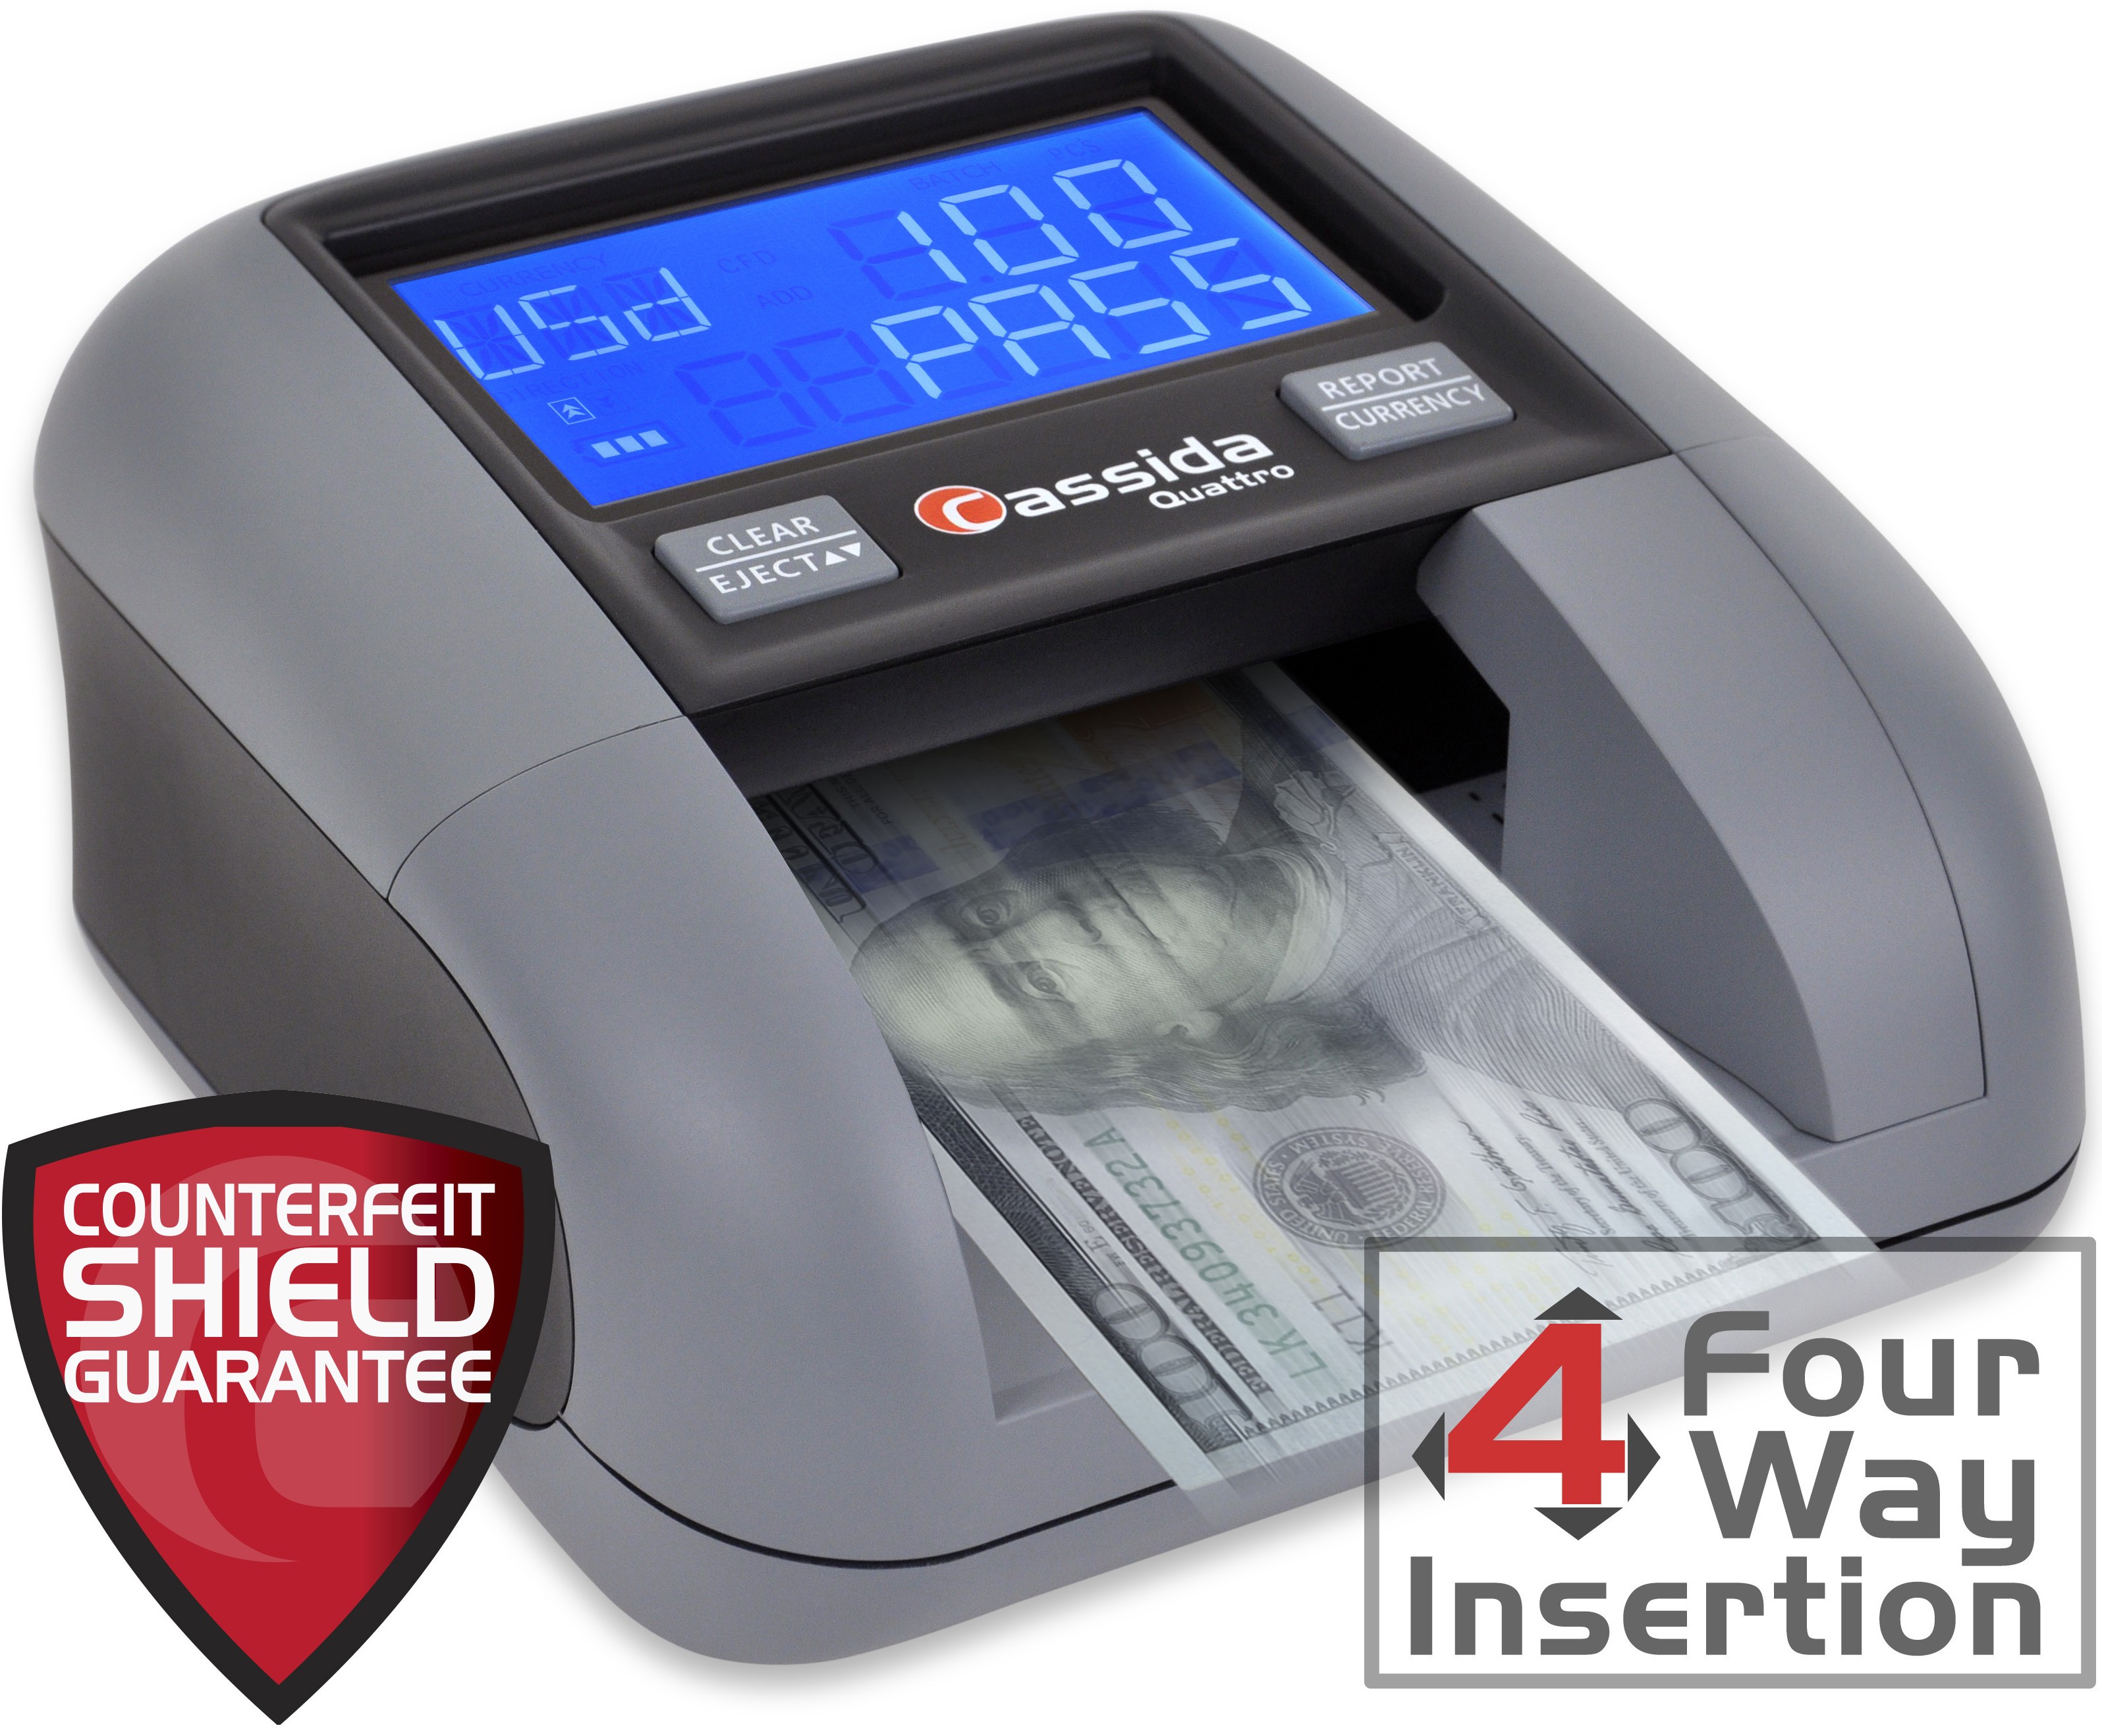 Cassida Quattro 4-way automatic counterfeit detector